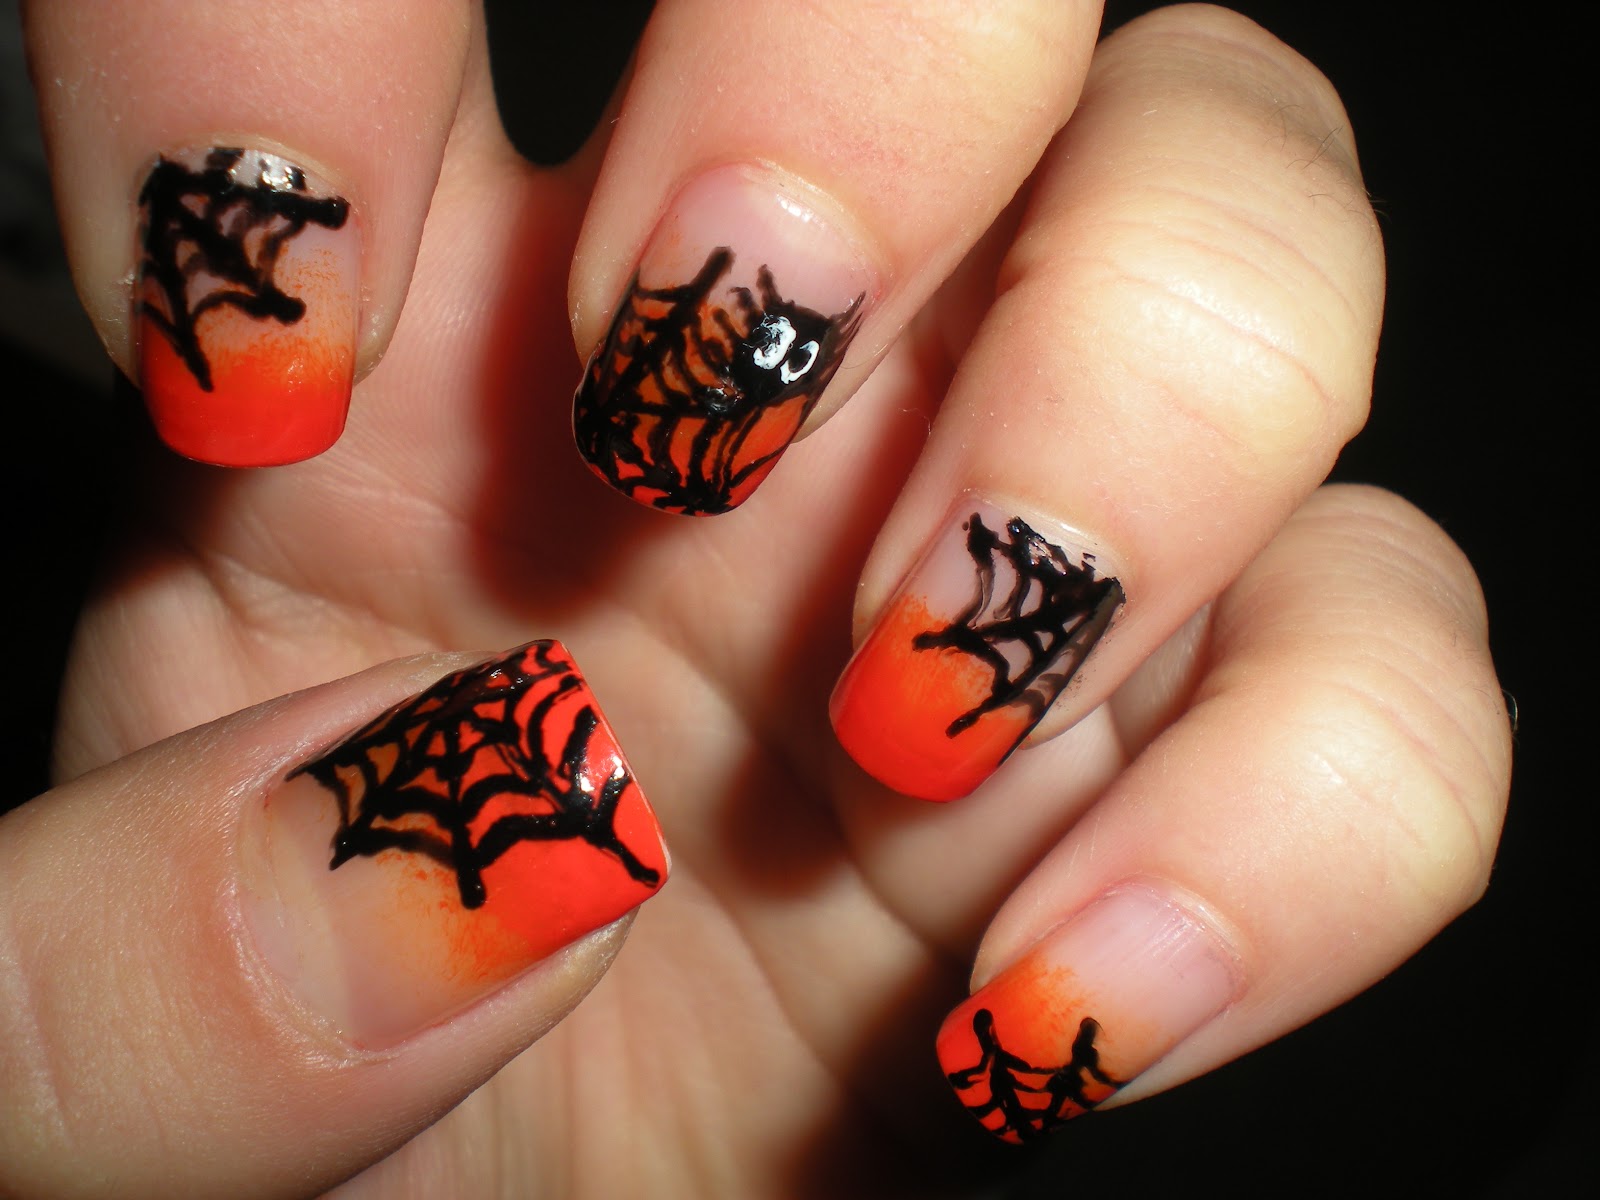 1. "Spooky Spiderweb Nails" - wide 4